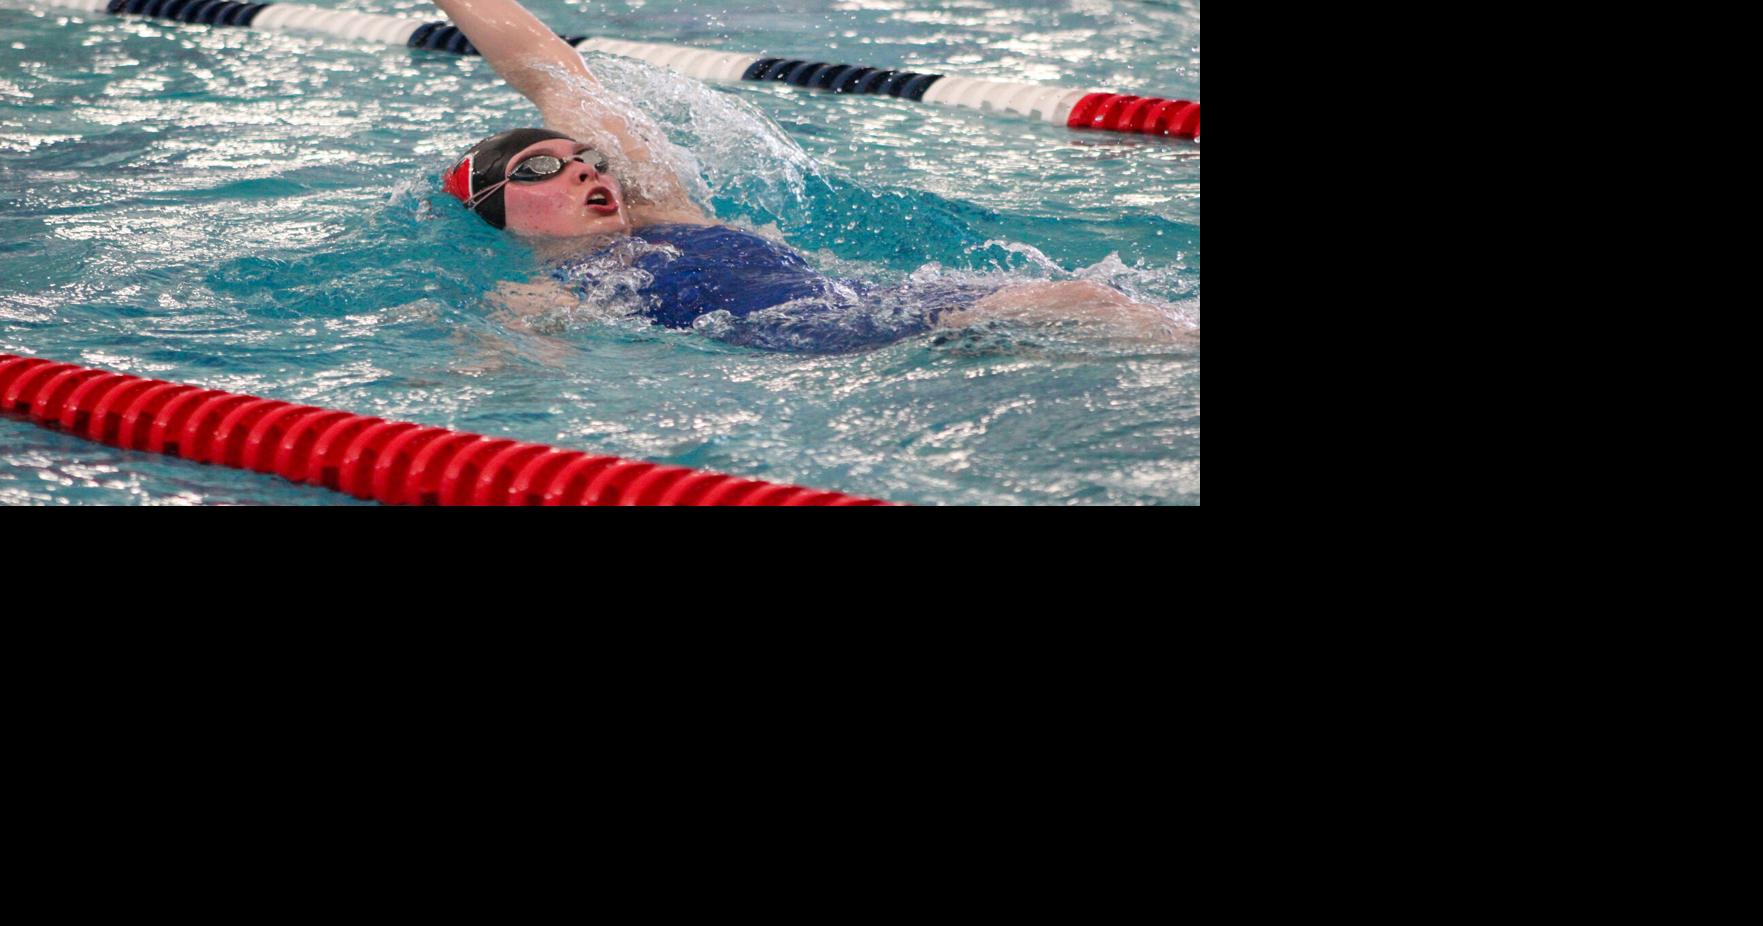 Corbett sophomore Anna Rondema wins bronze at State Swim Championships